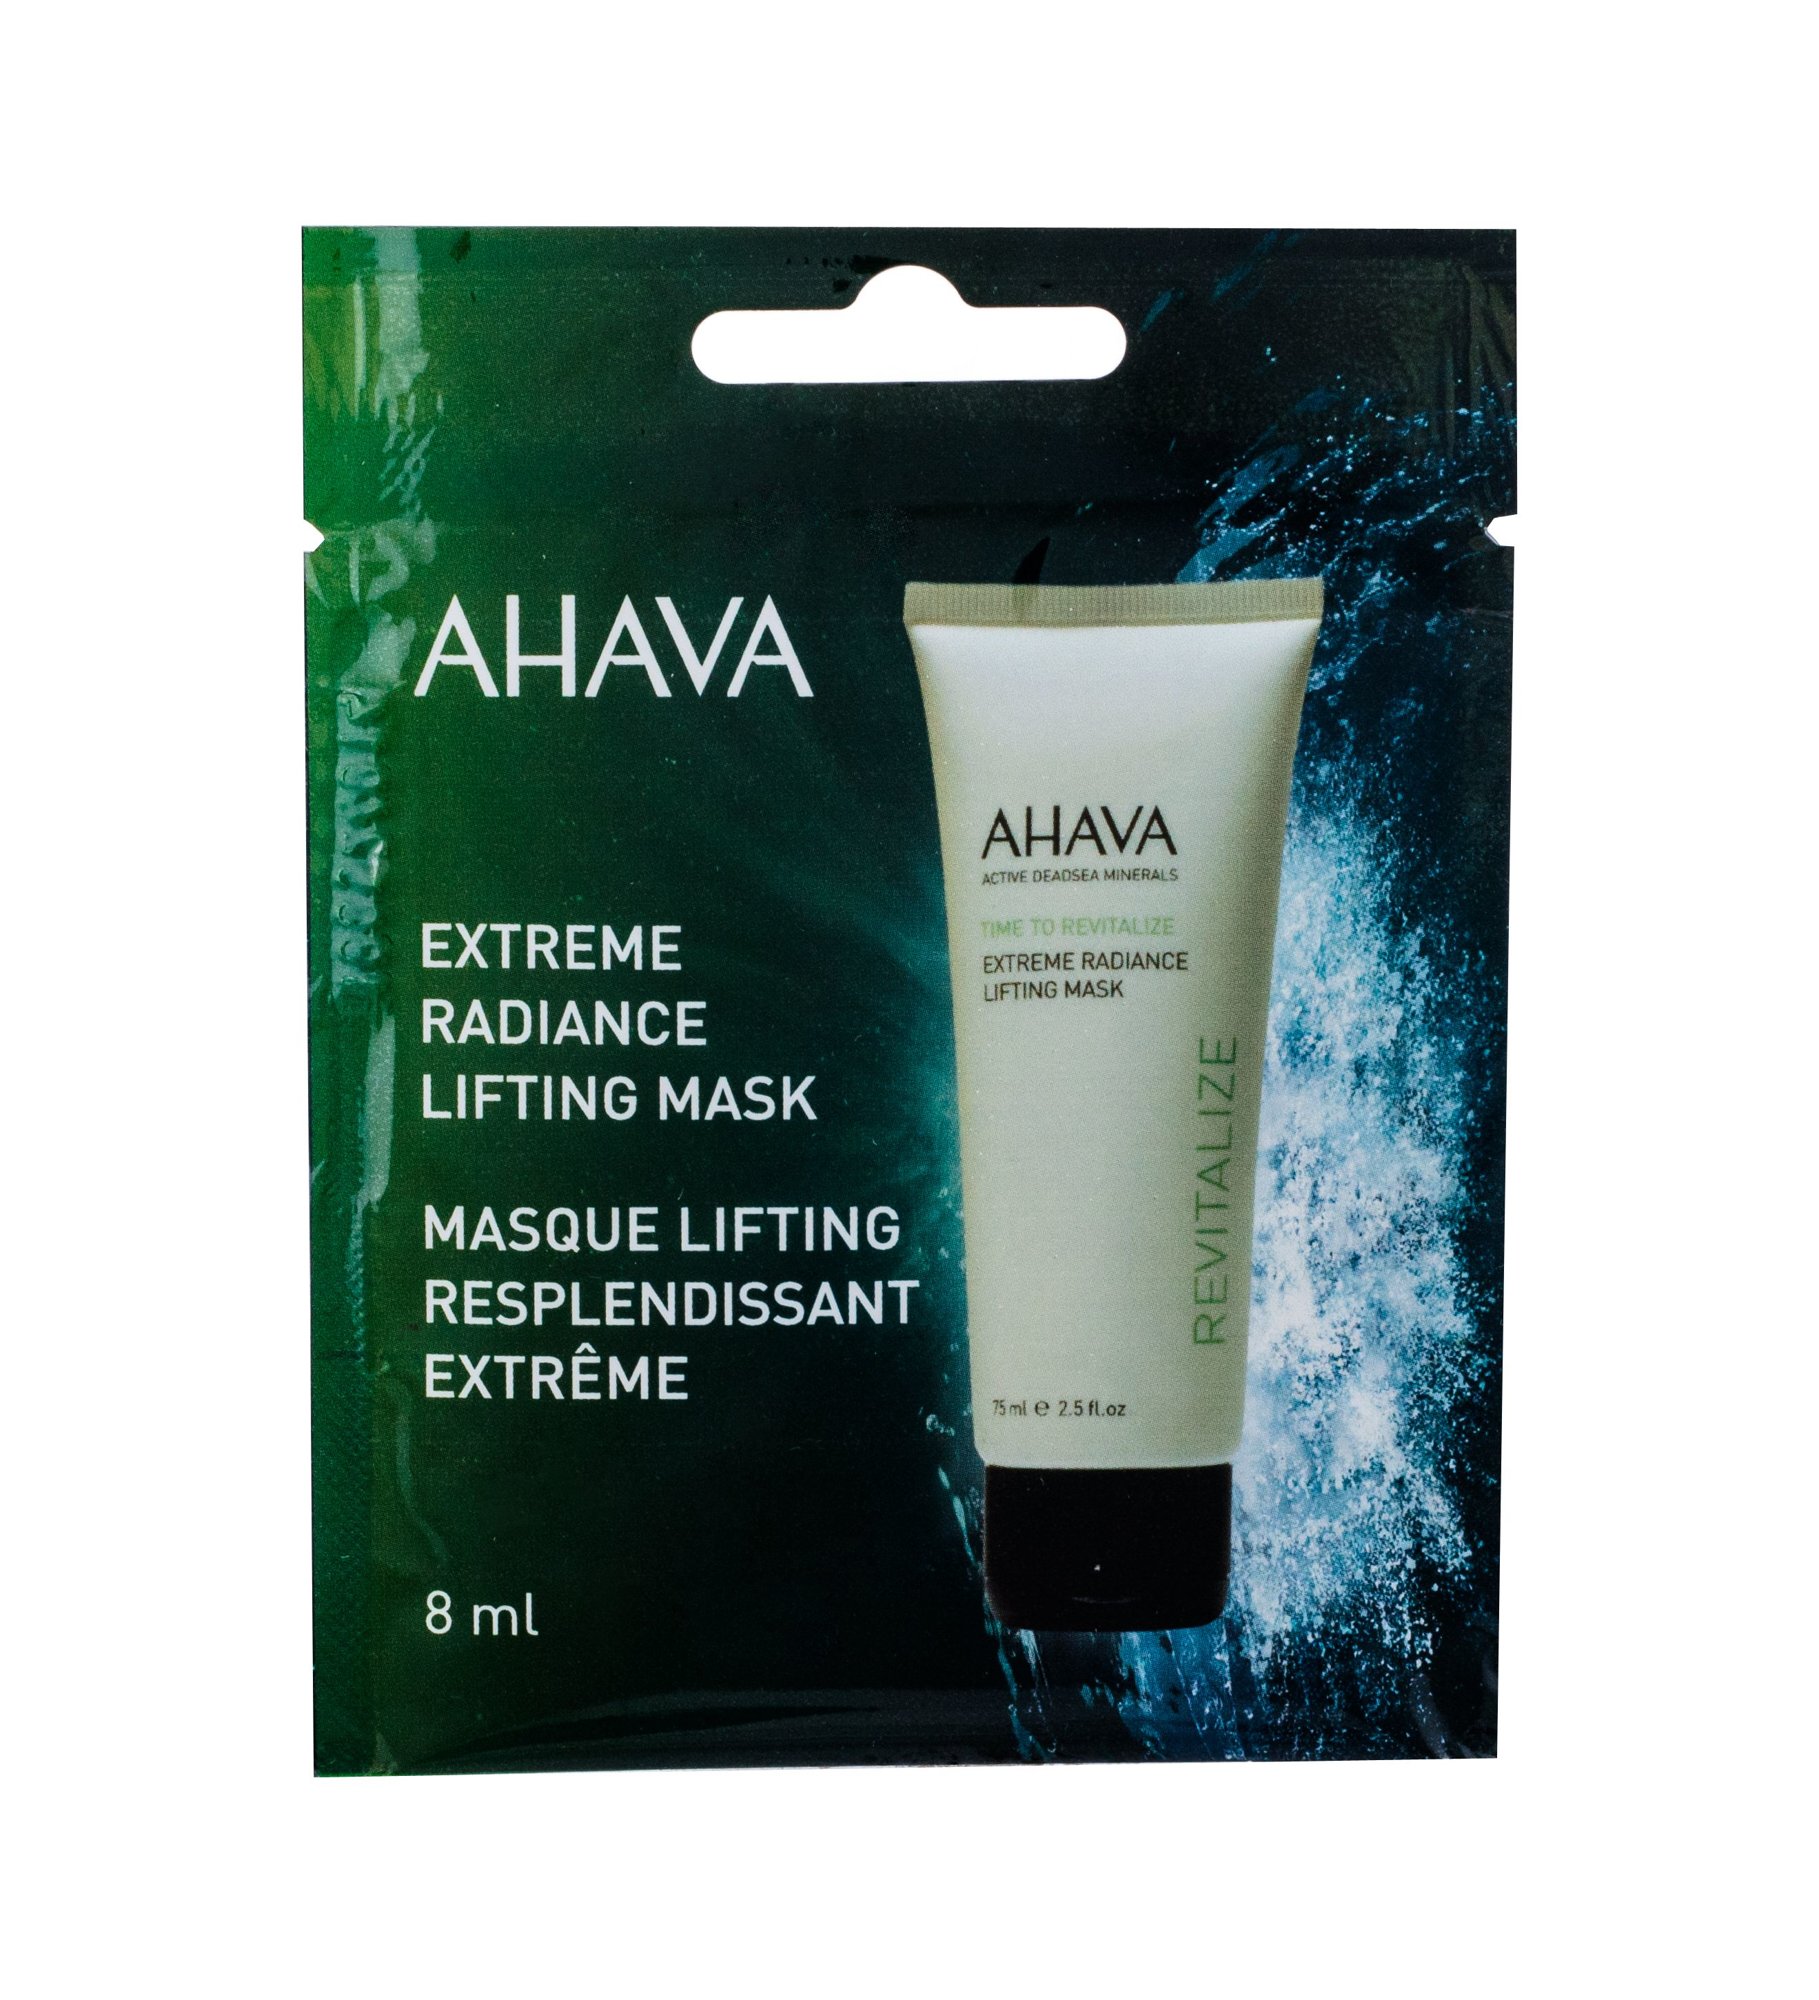 AHAVA Extreme Time To Revitalize 8ml Veido kaukė